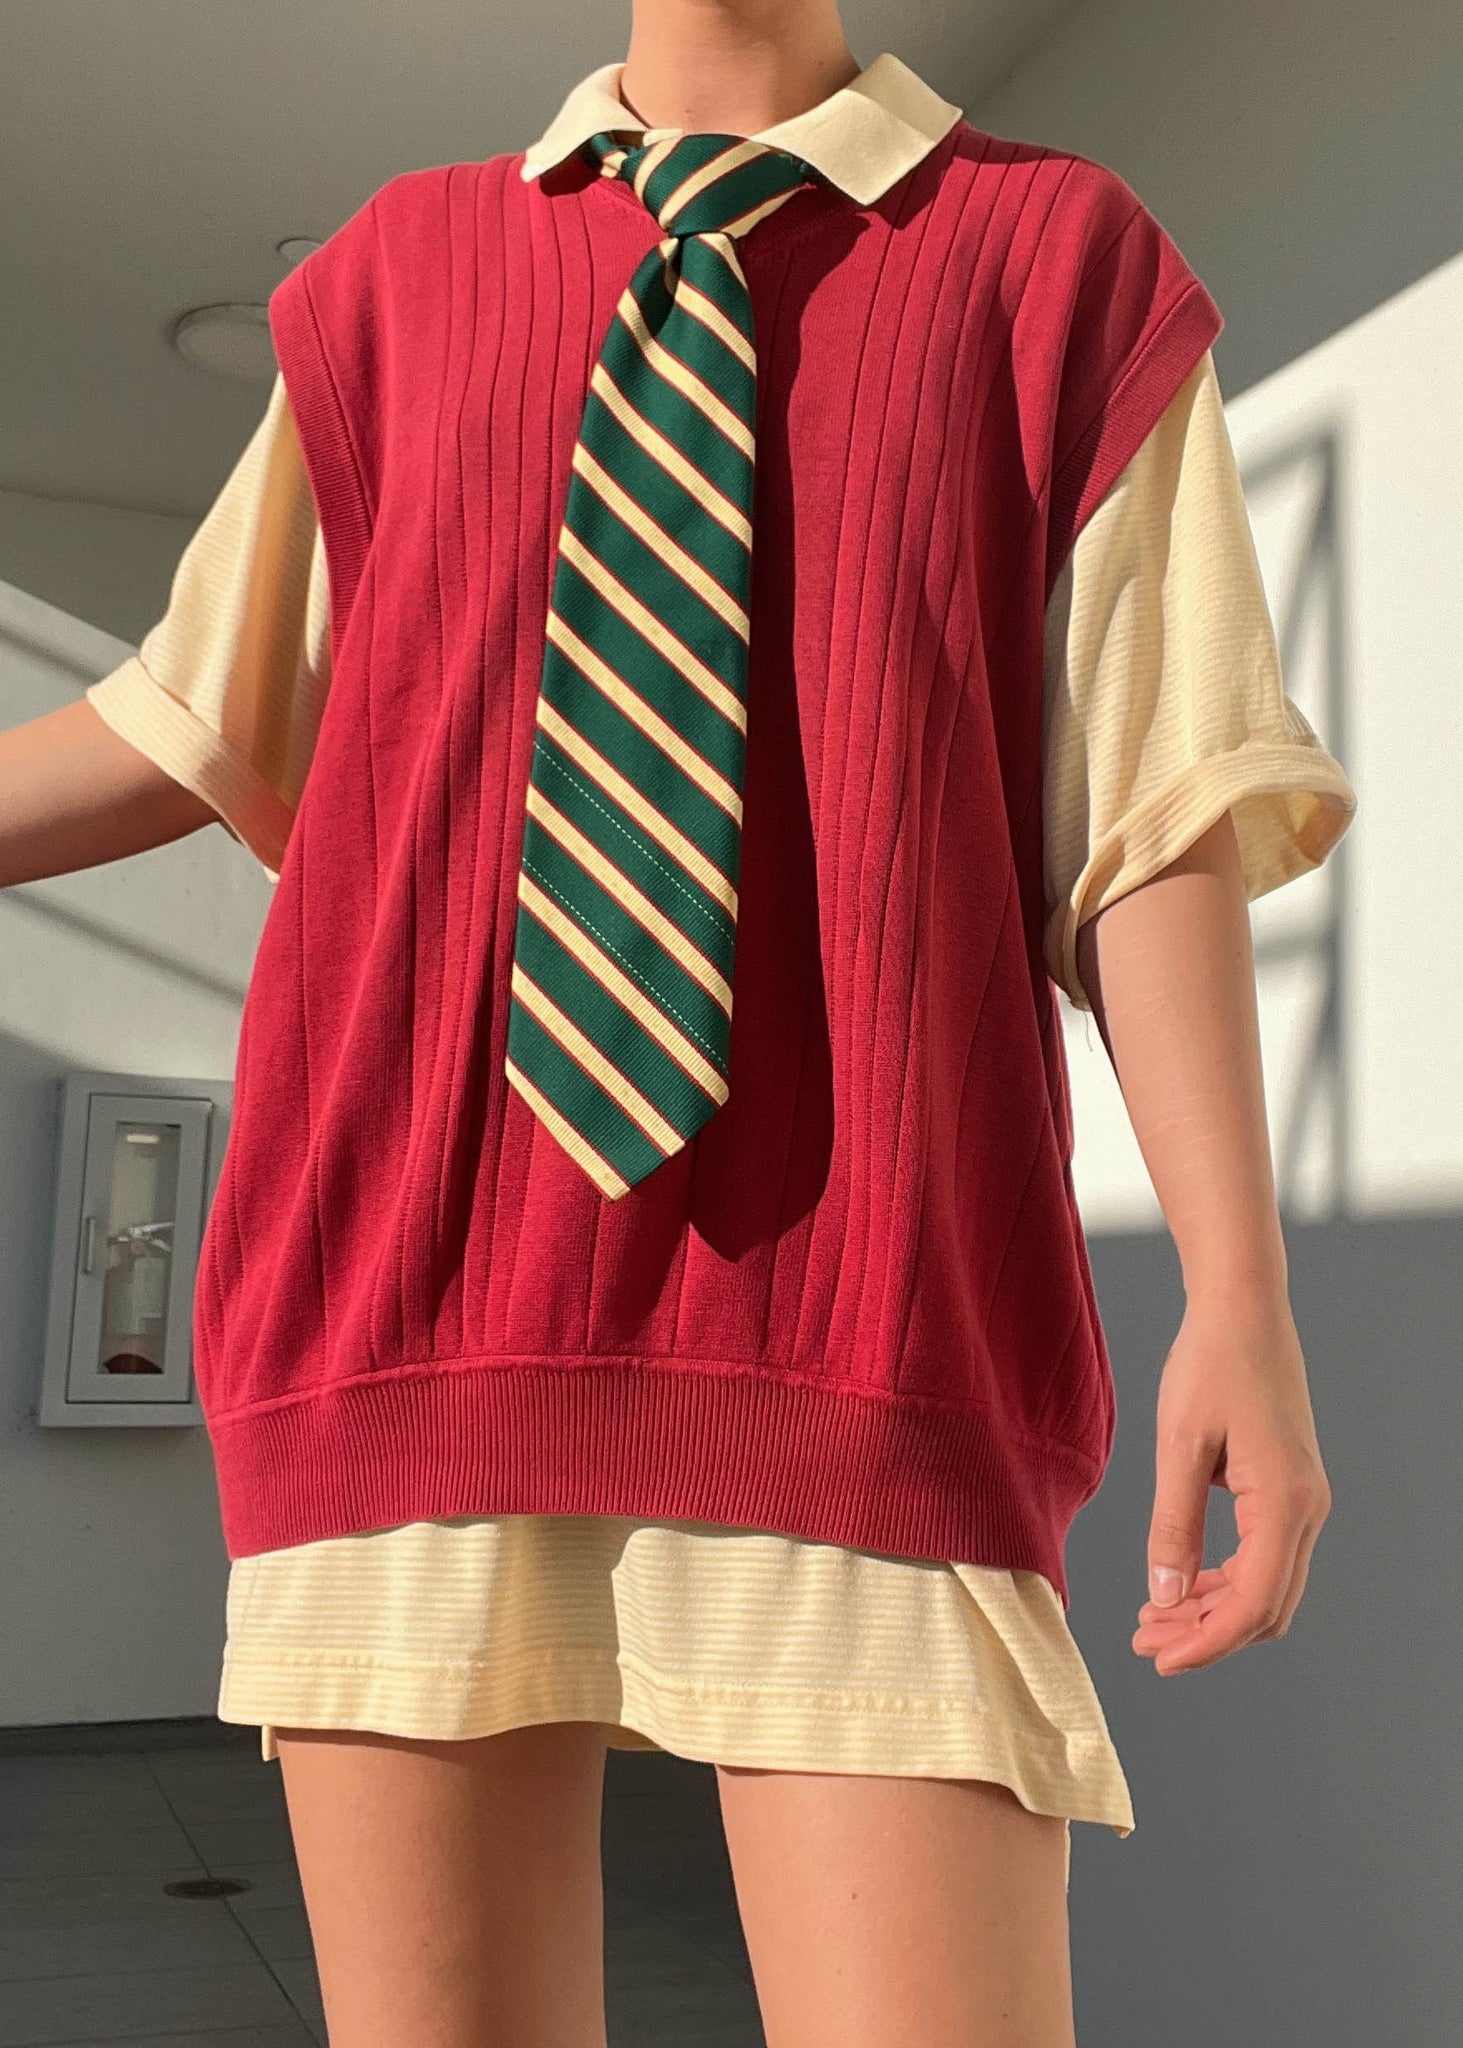 Layered Sweater Vest + Tie Set (M-XL)